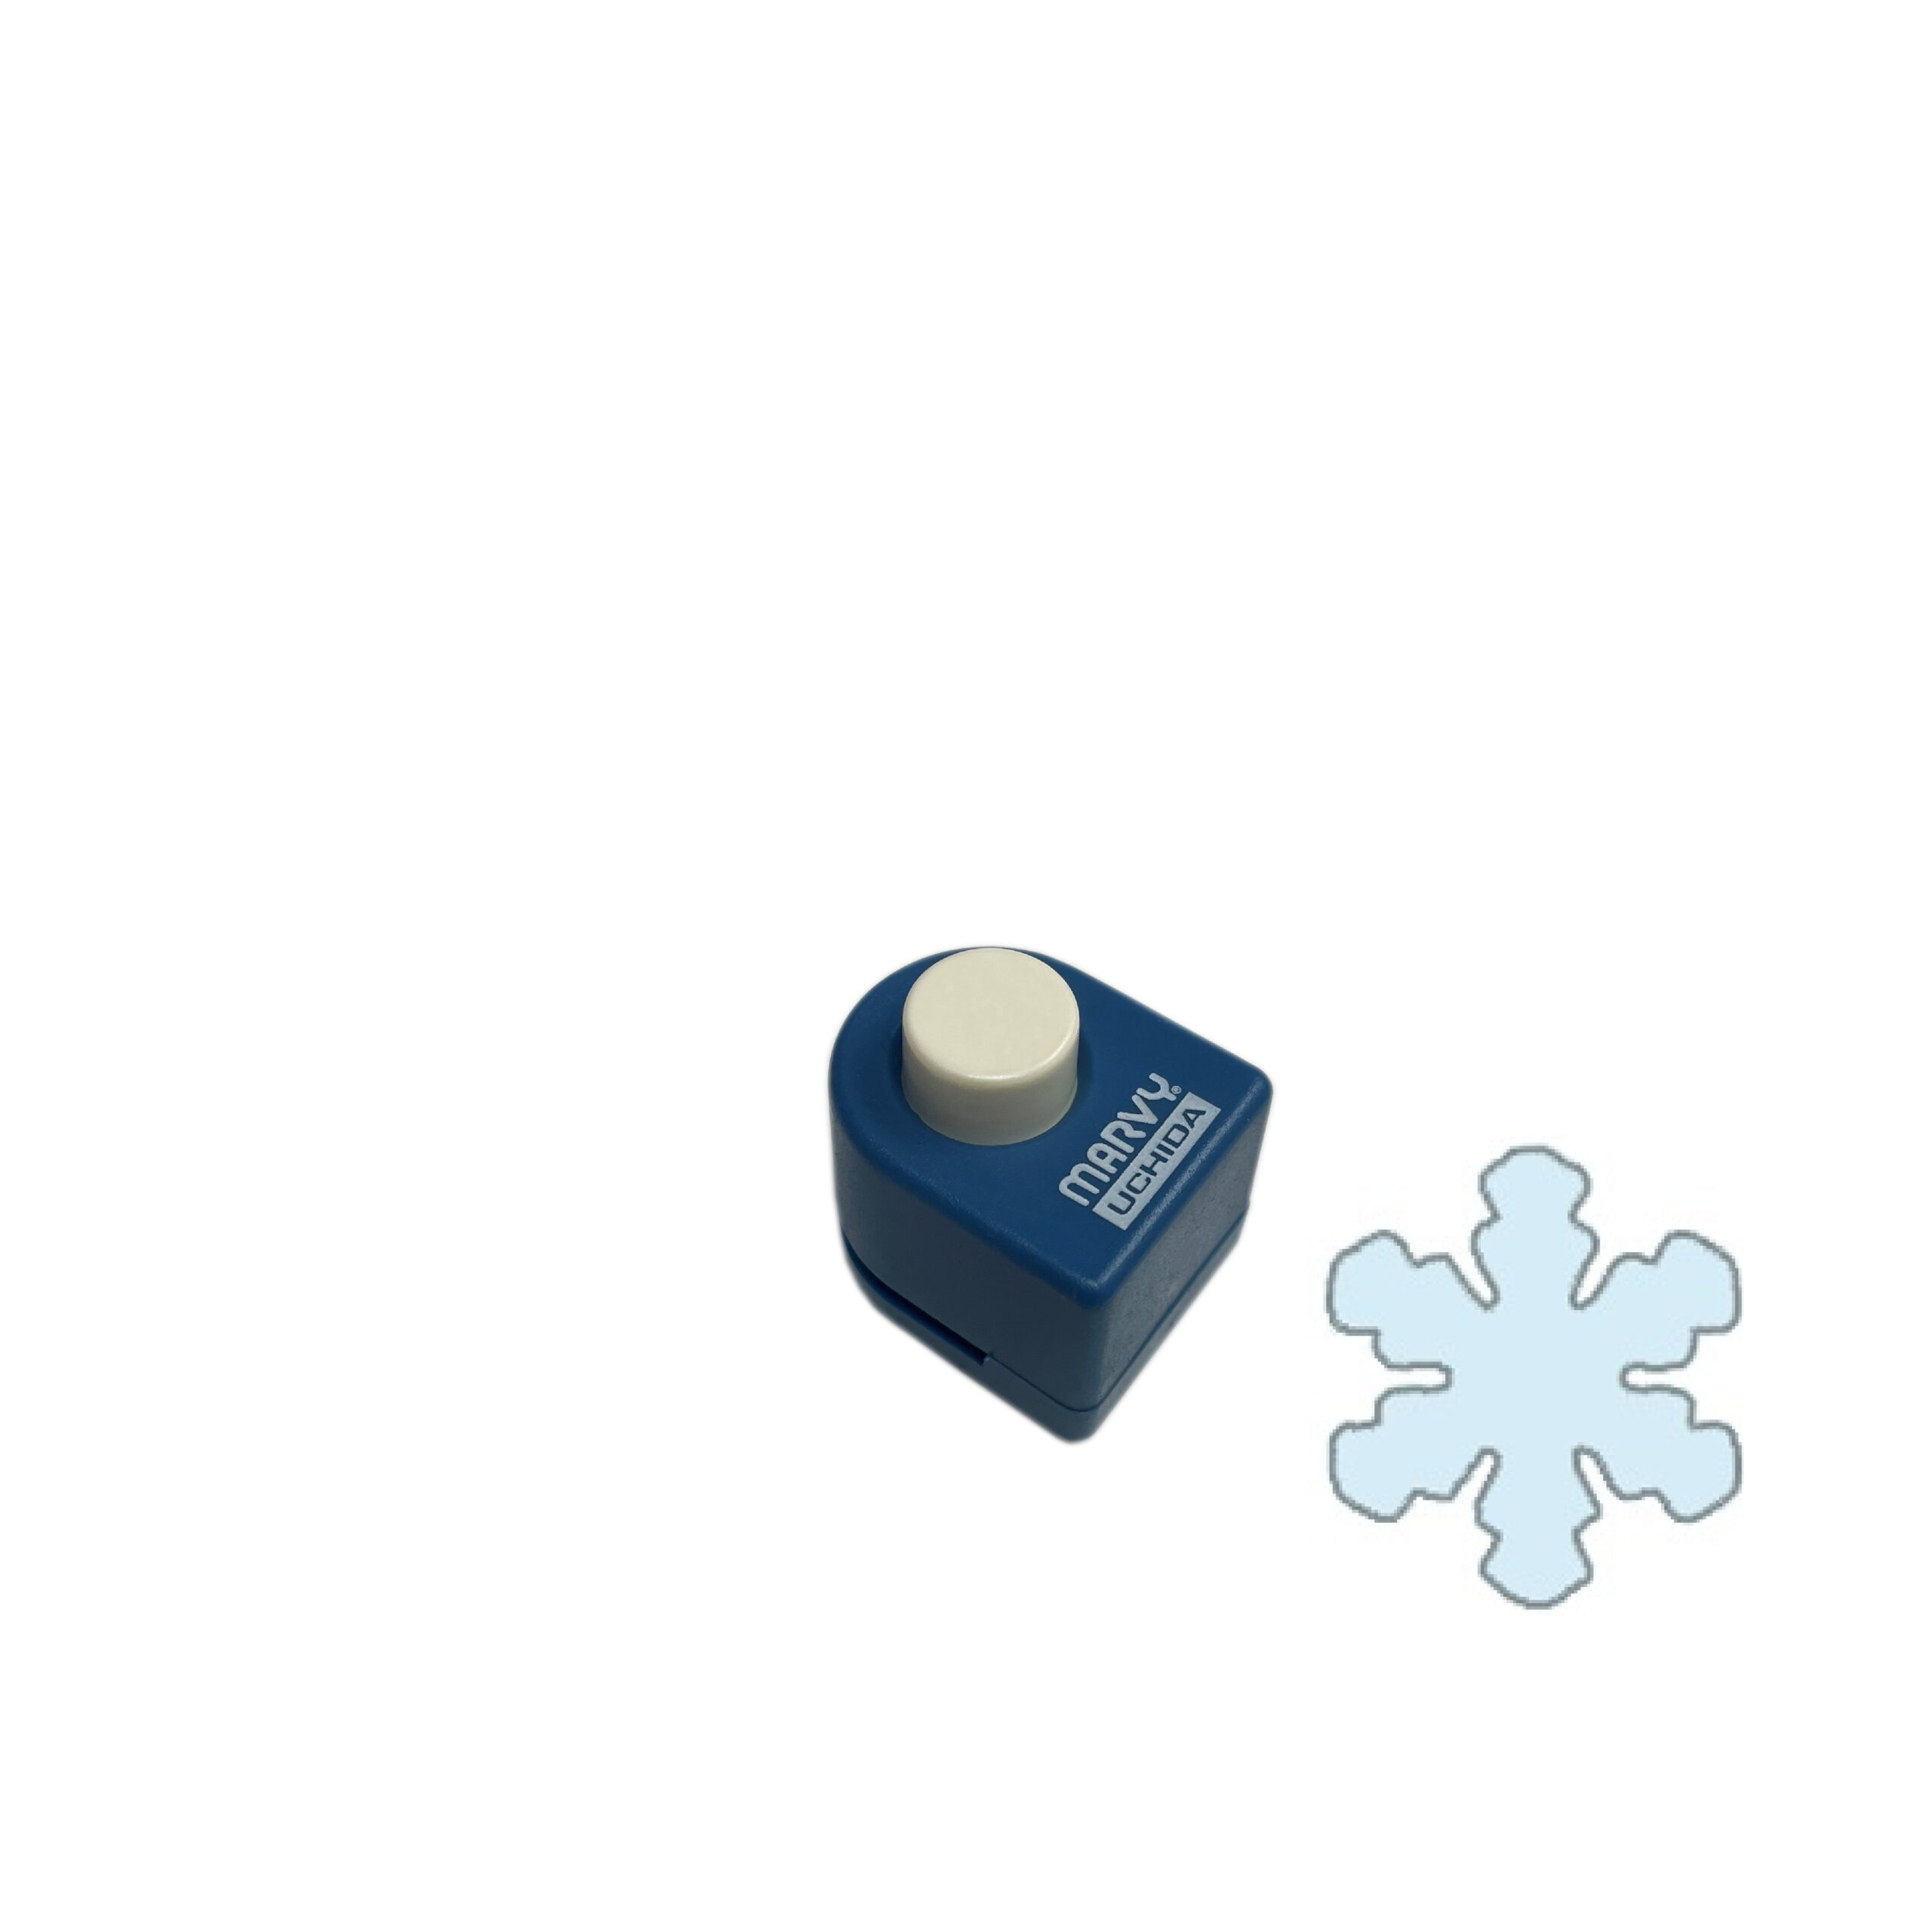 Mini Craft Punch Snowflake